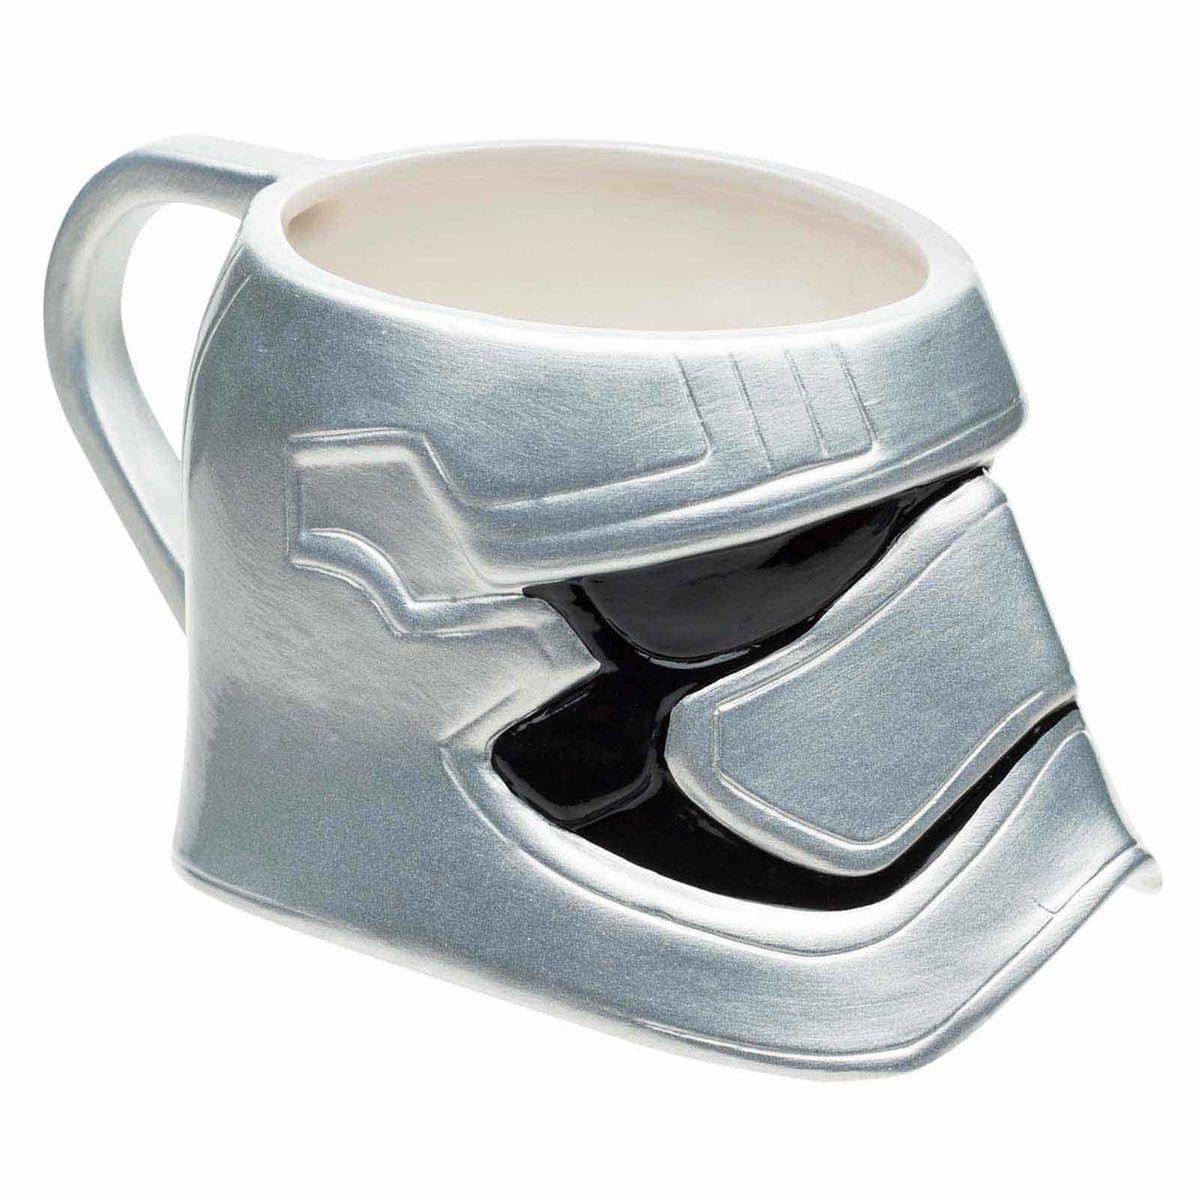 Star Wars: The Force Awakens Captain Phasma Sculpted Ceramic Mug